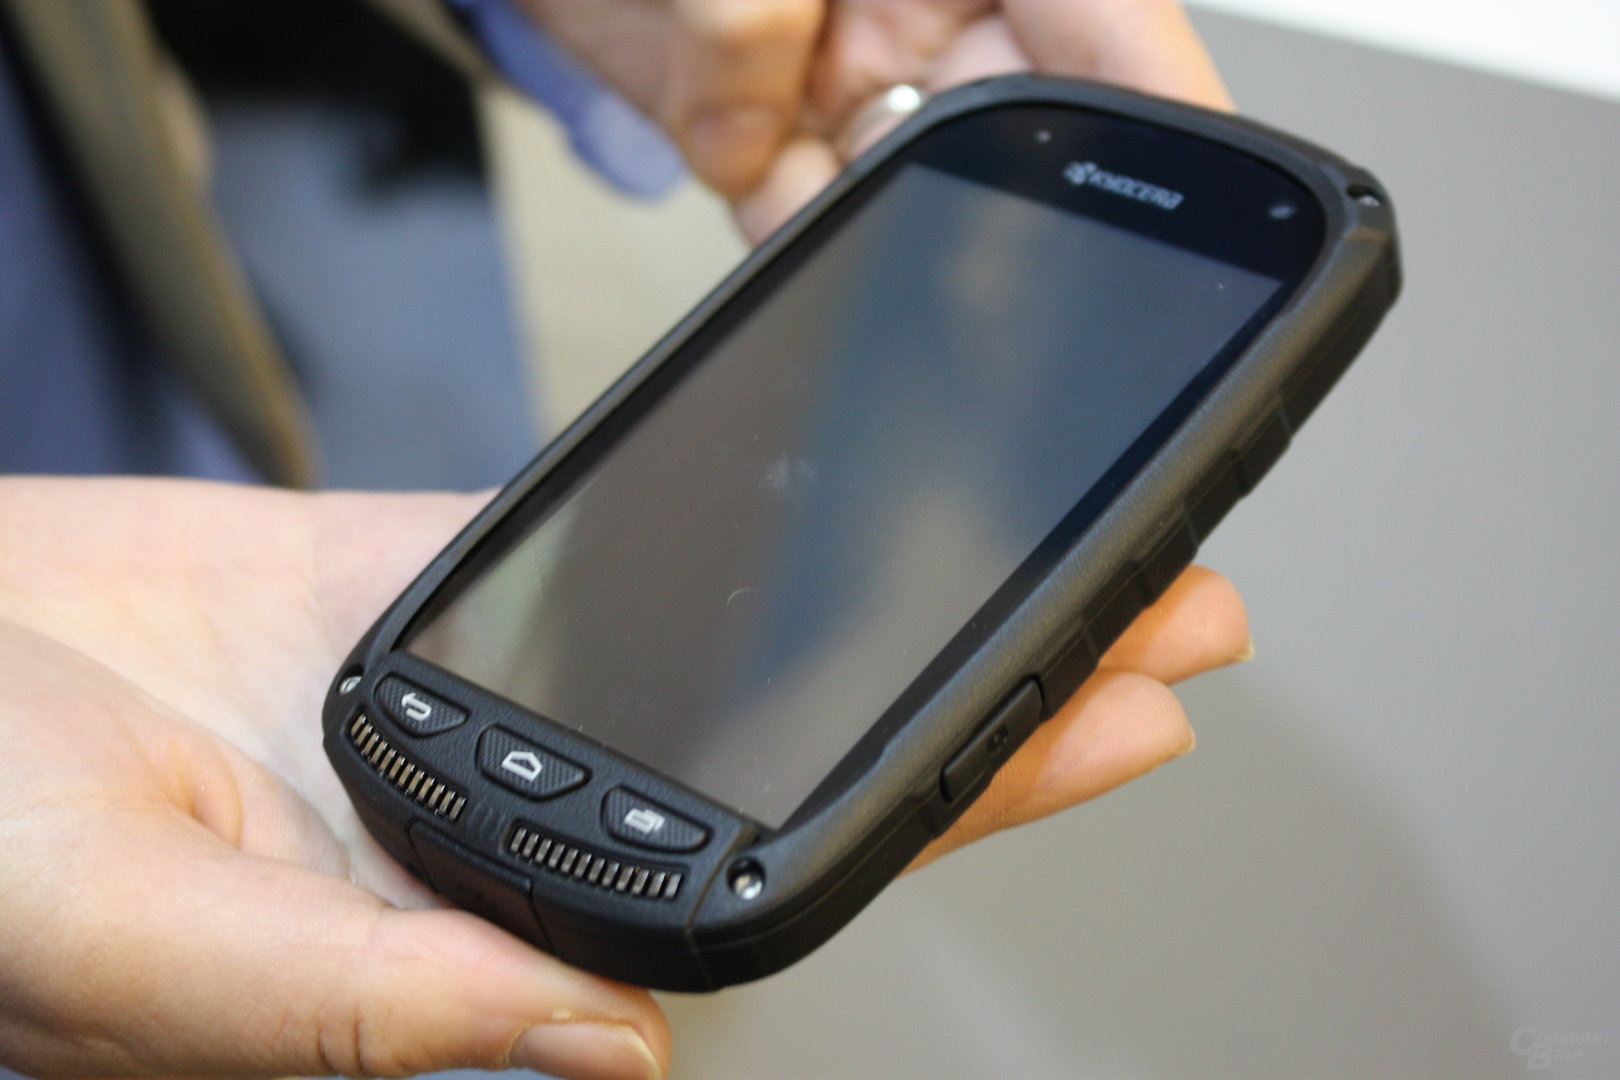 Prototyp des Kyocera-Smartphones mit Solarzellen unter dem Touchscreen